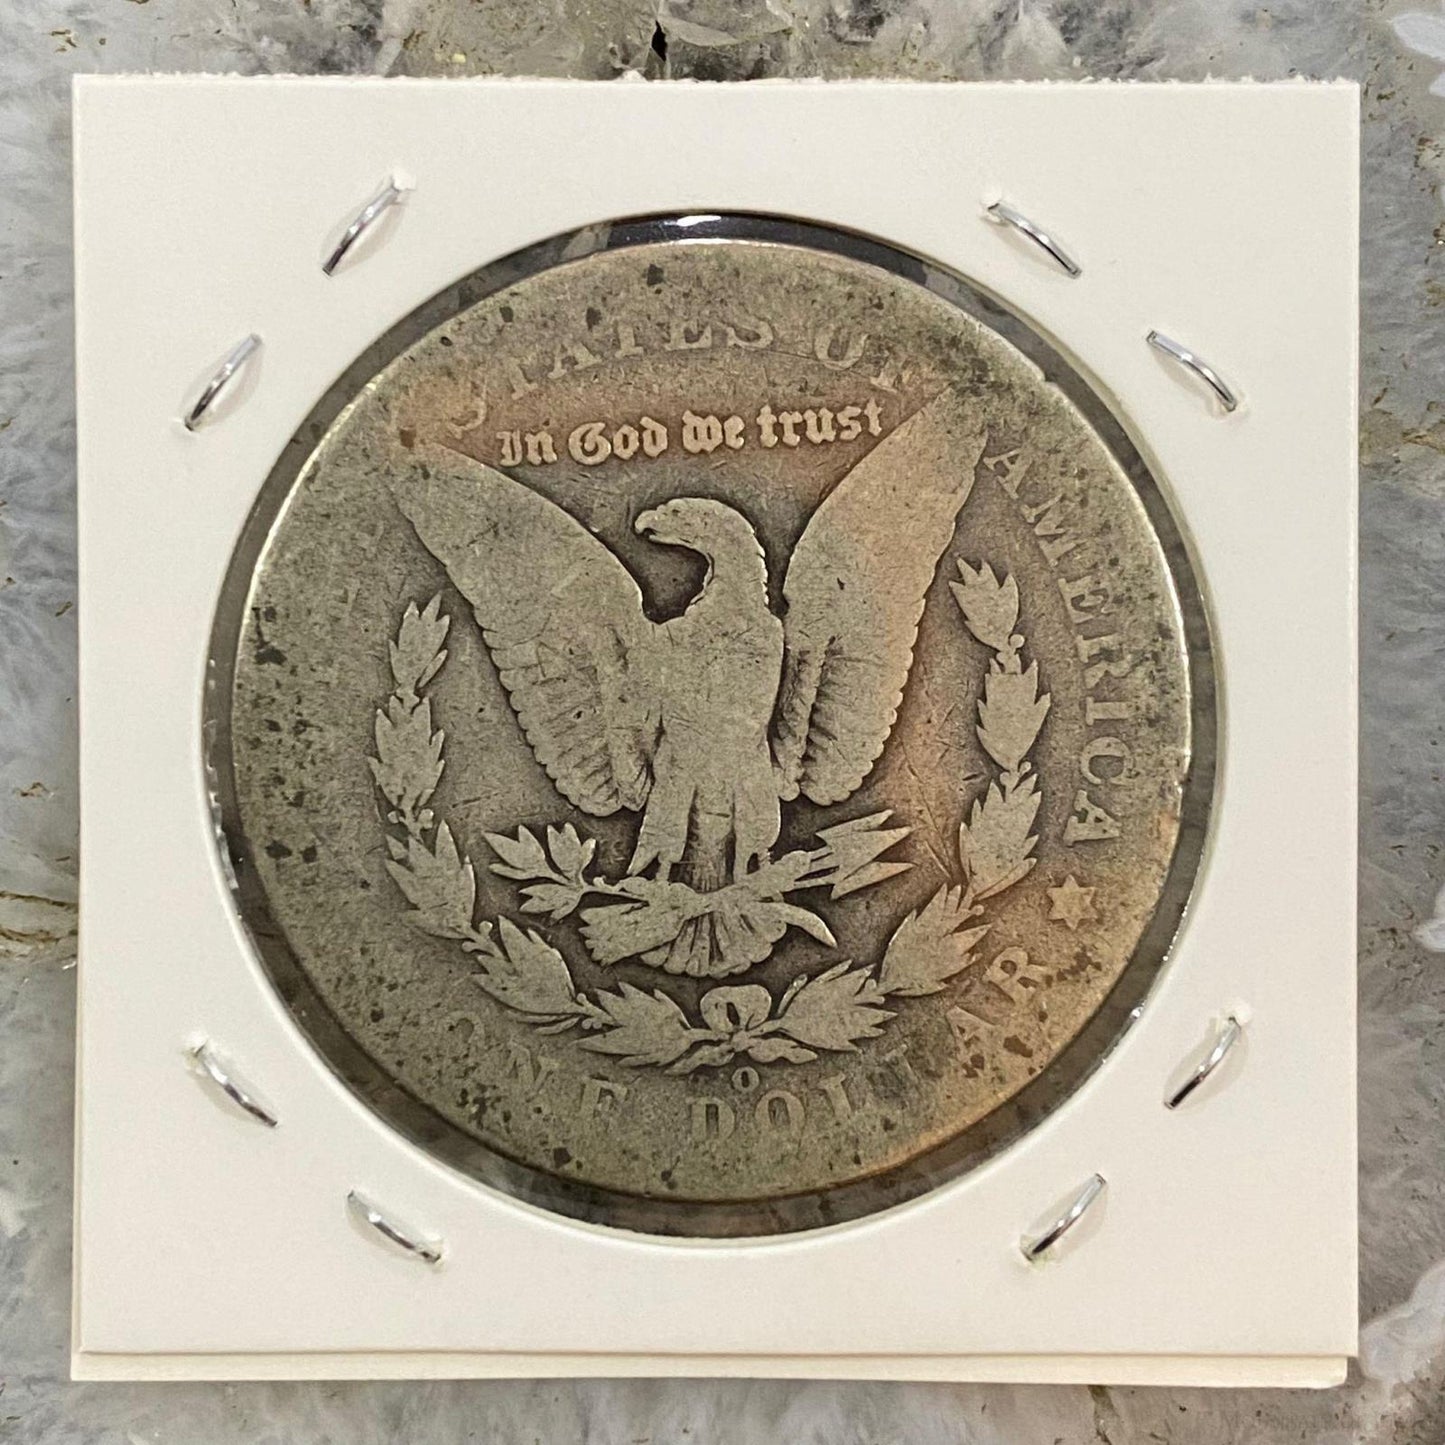 1901-O US Morgan Silver Dollar AG #111823-3GE